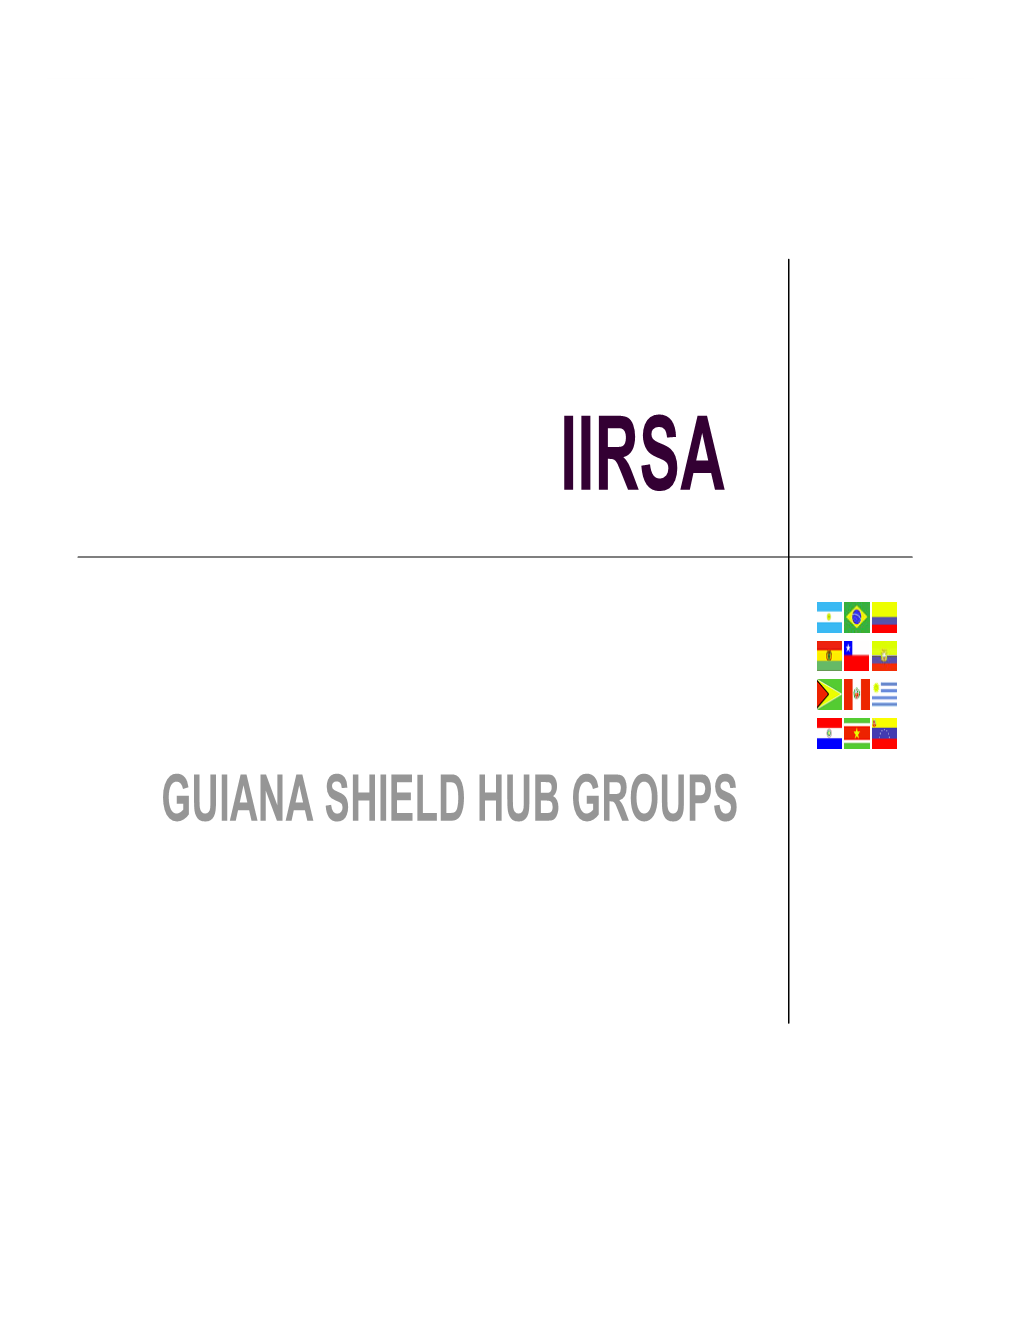 GUIANA SHIELD HUB GROUPS Contents